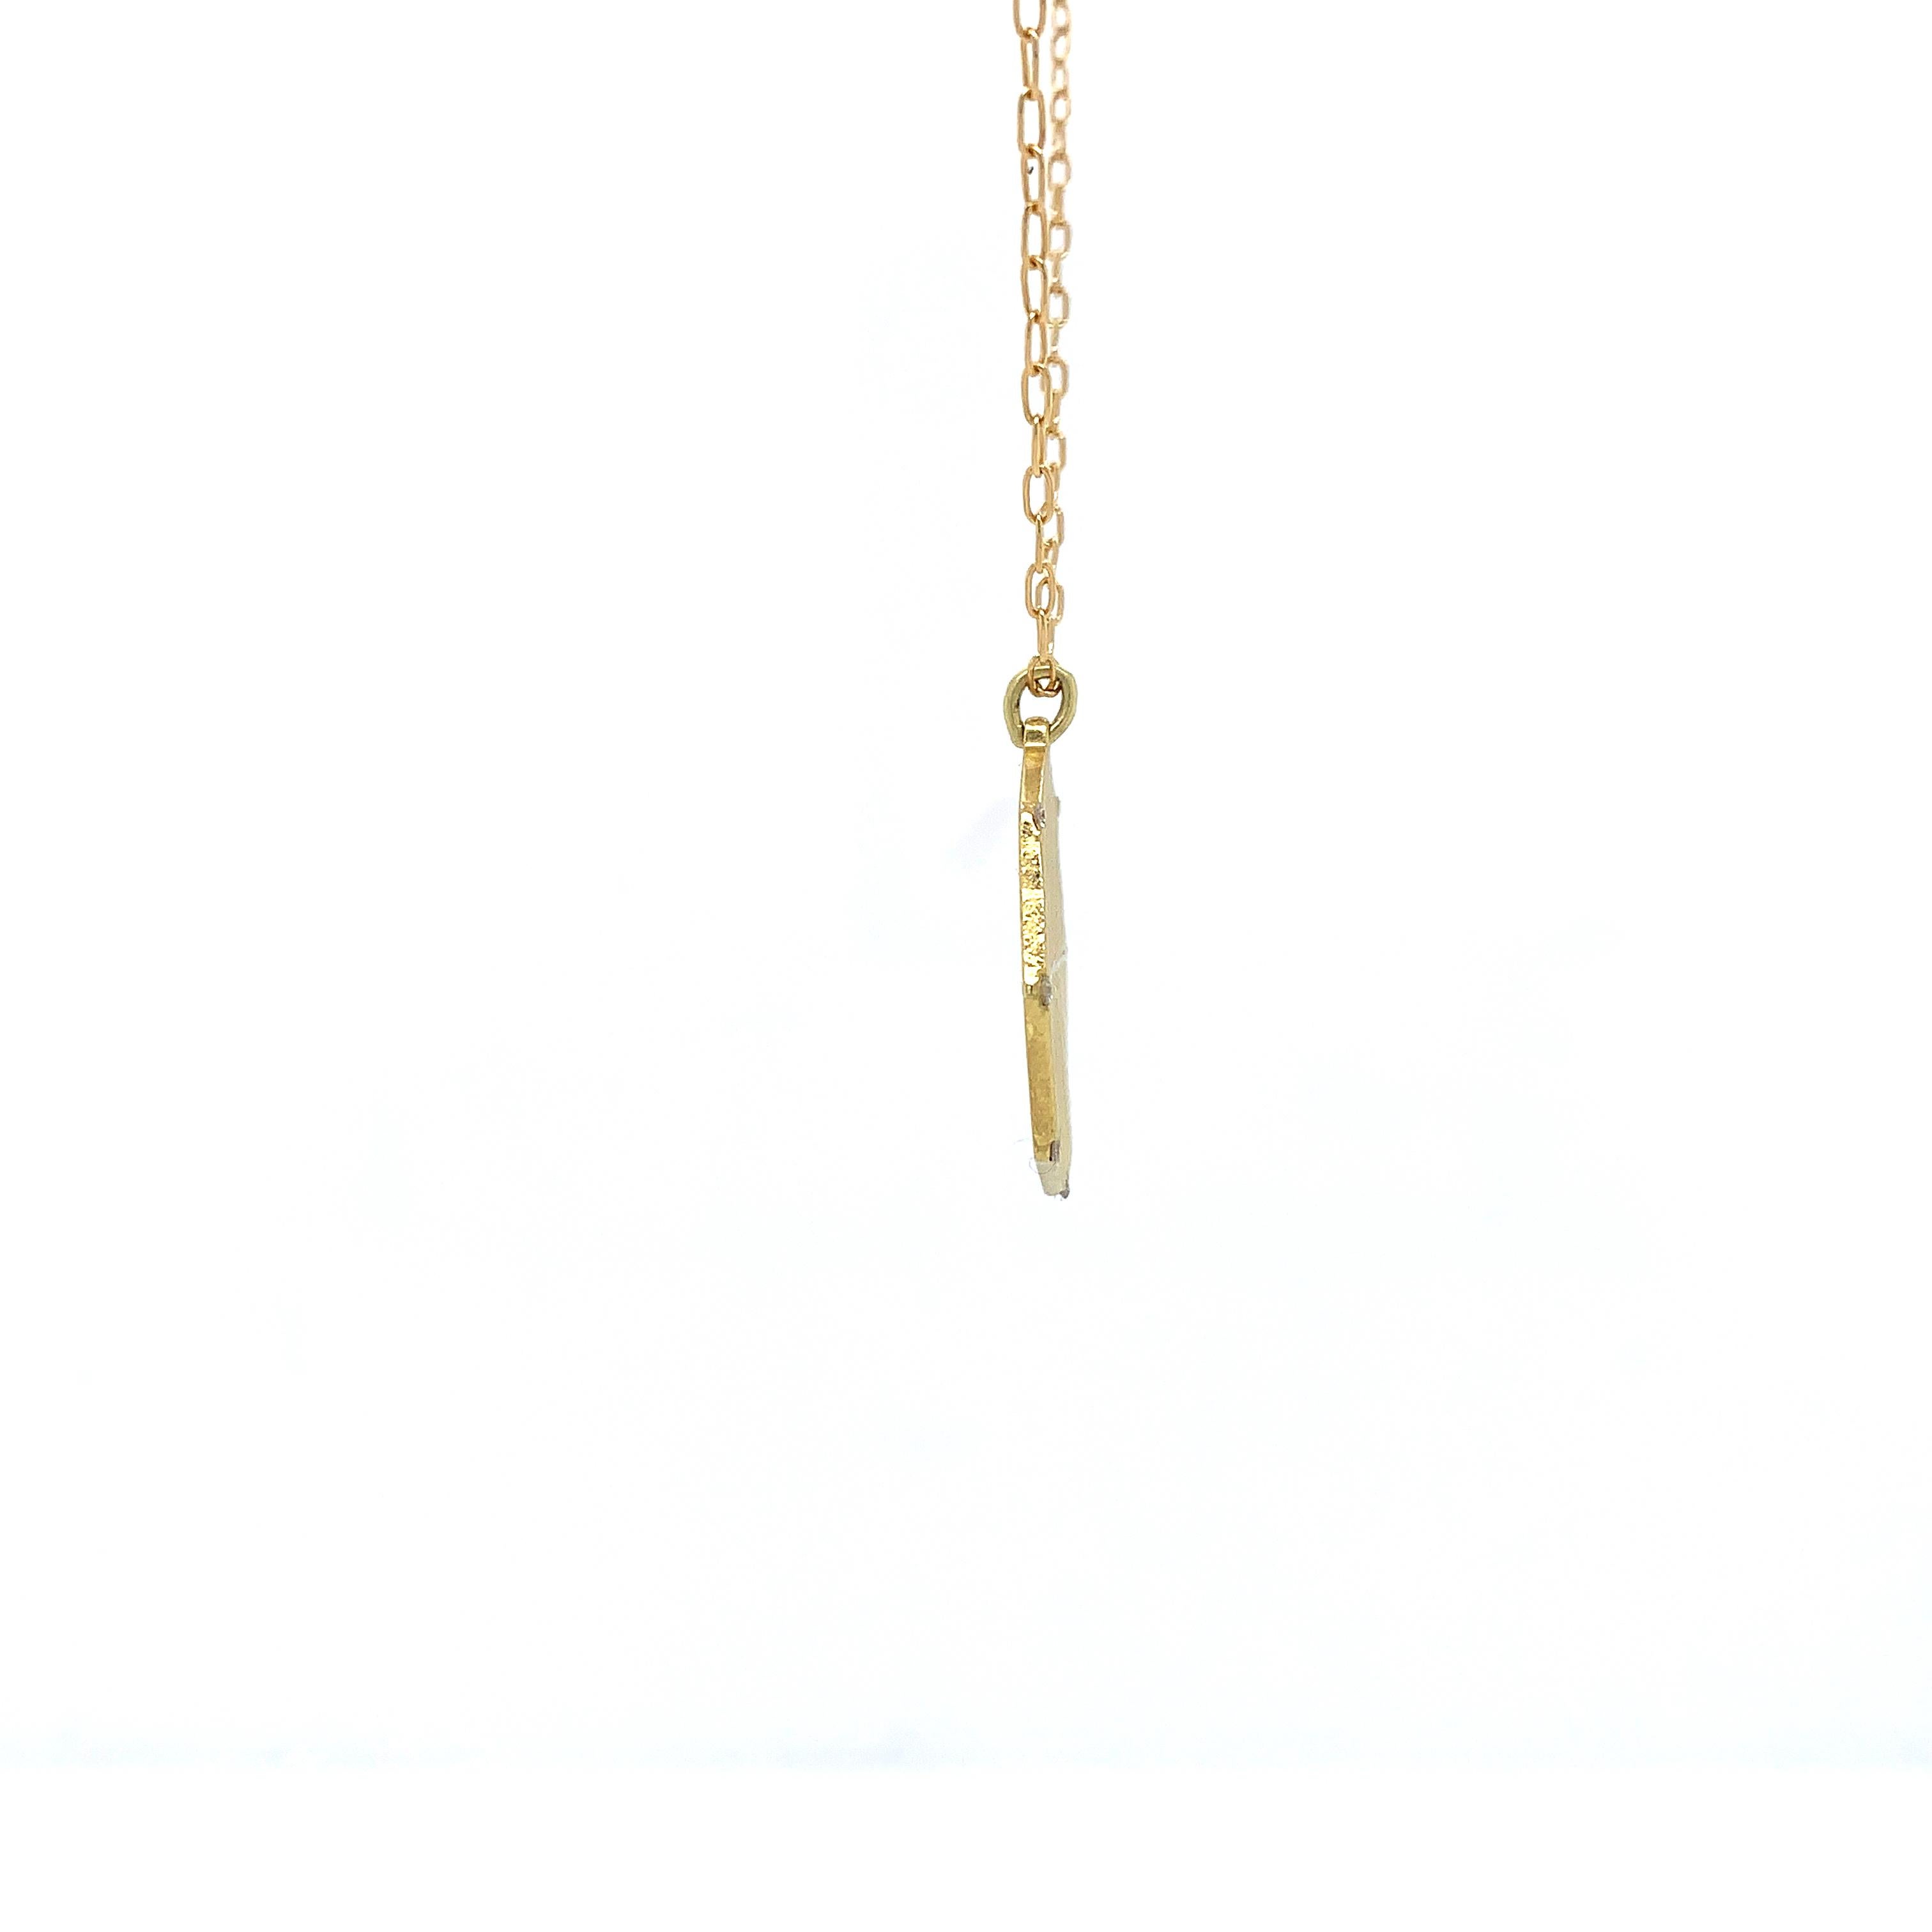 18k Green Gold Diamond Necklace
7 Diamond Accents
18” Chain